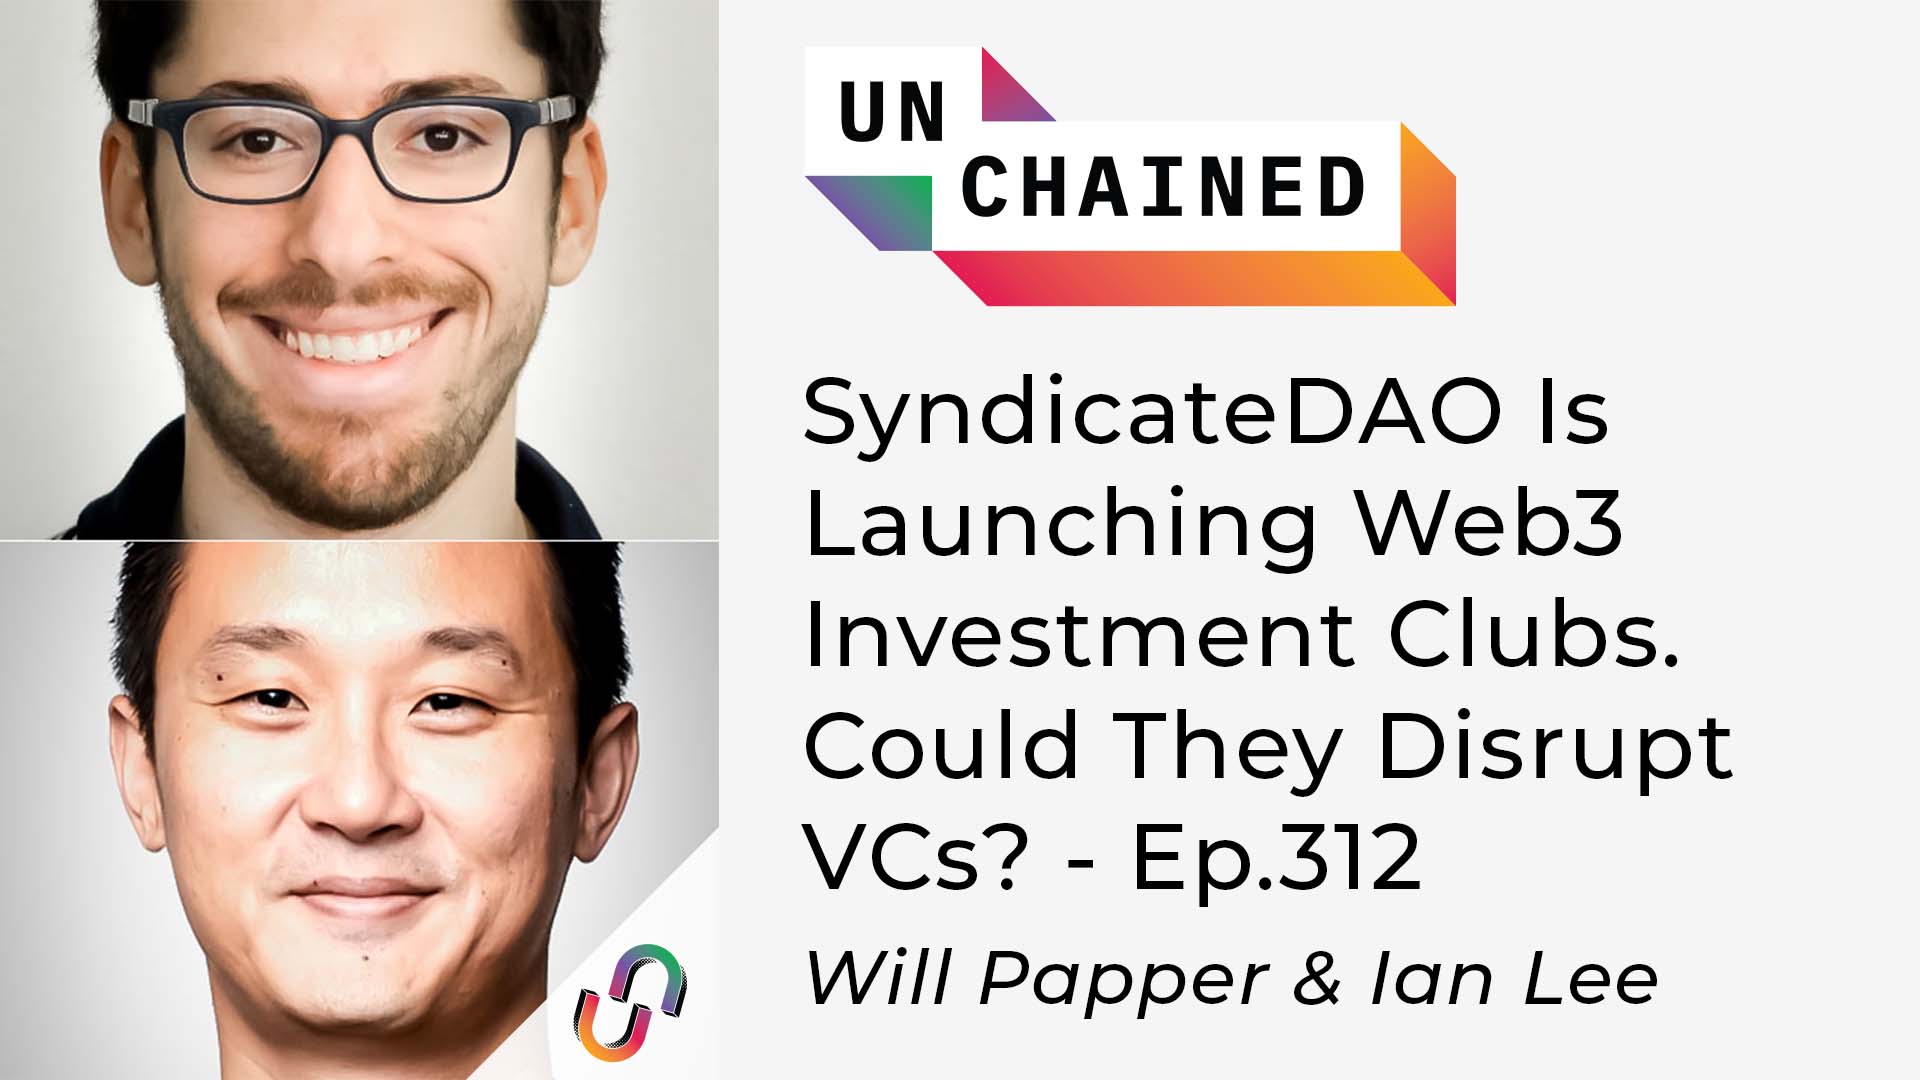 SyndicateDAO 正在推出 Web3 投资俱乐部。他们会颠覆风险投资吗？ Plato区块链数据智能。垂直搜索。人工智能。